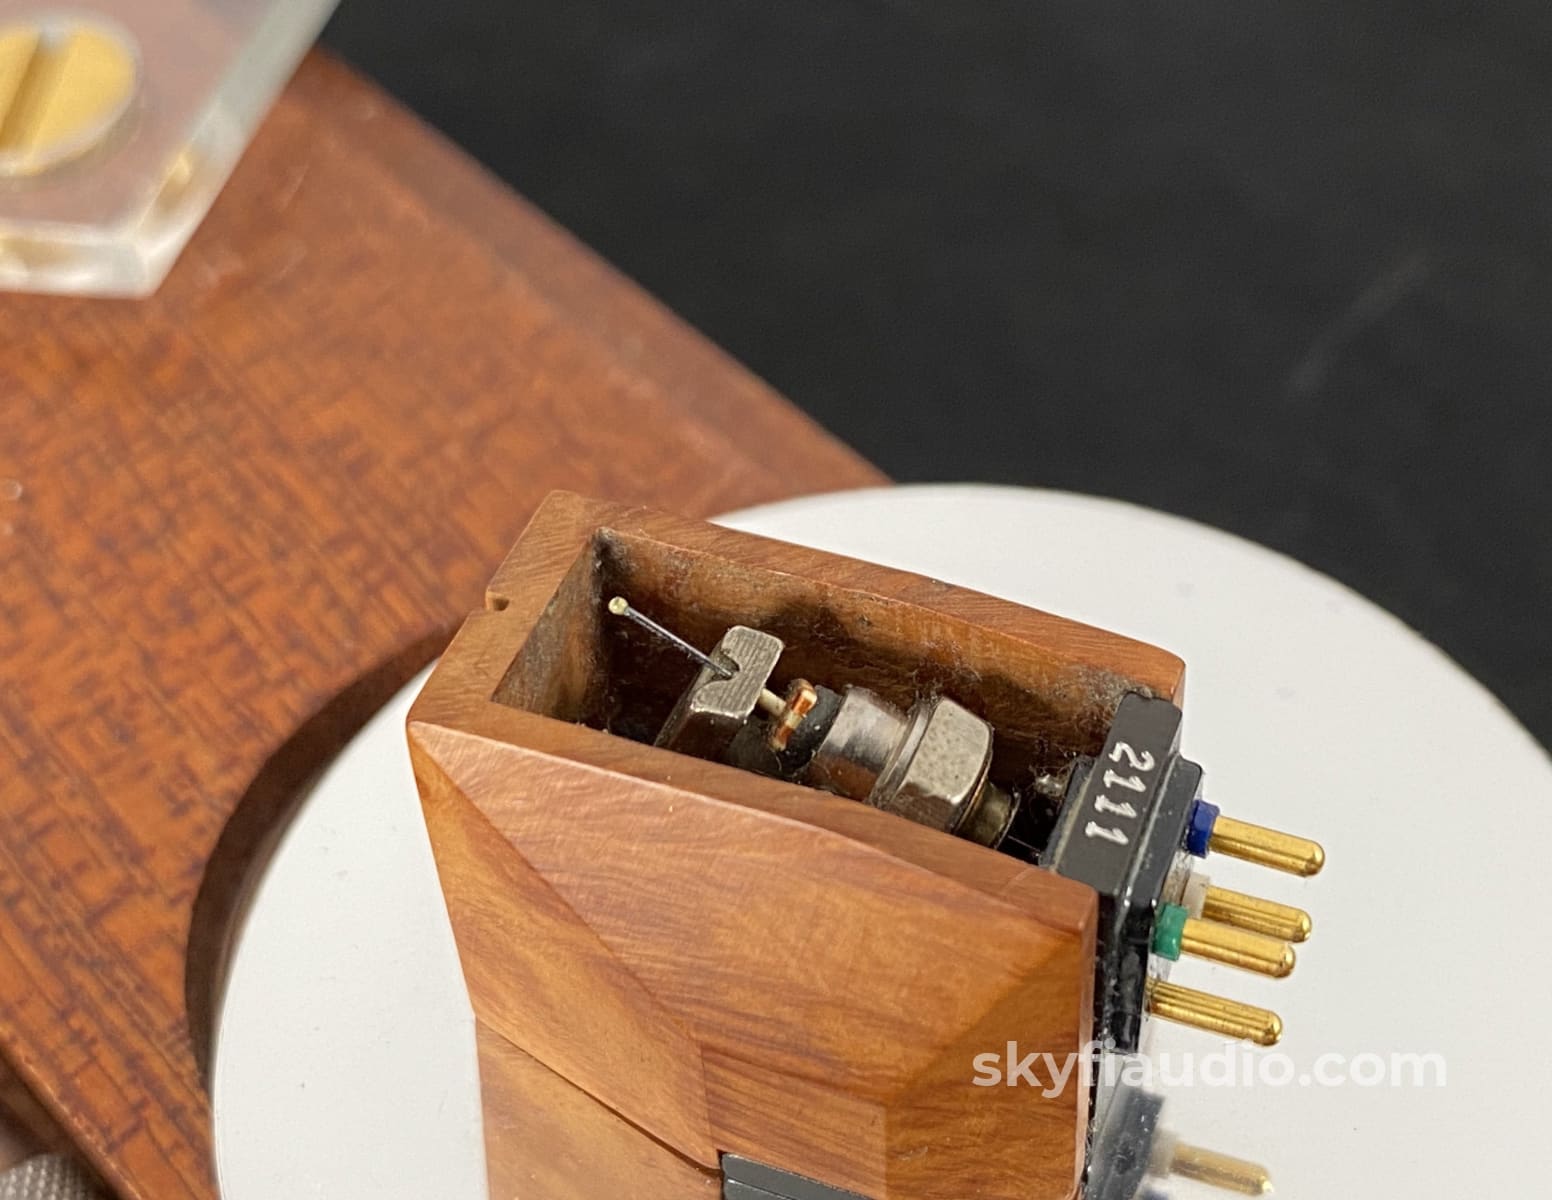 Benz Micro Ref Mc (Moving-Coil) Cartridge In Original Box Phono